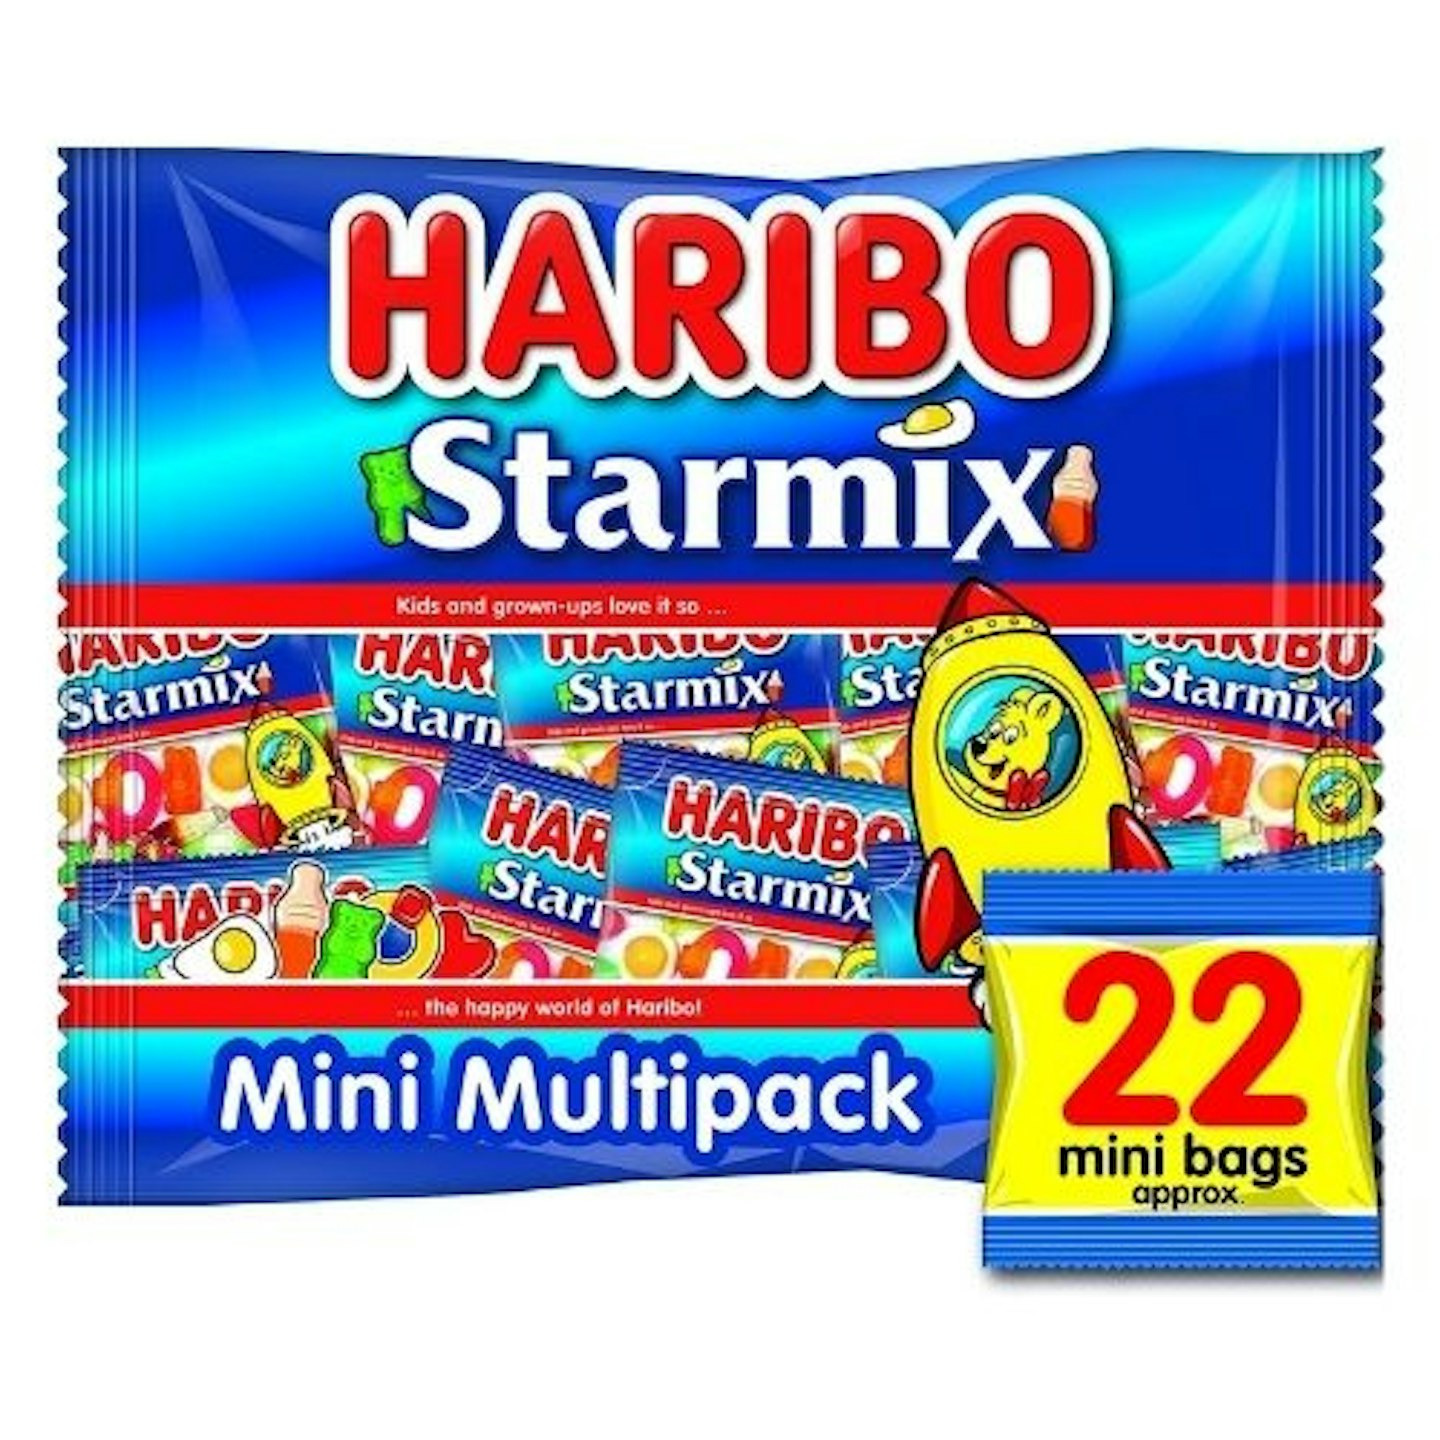 Haribo Starmix Multipack